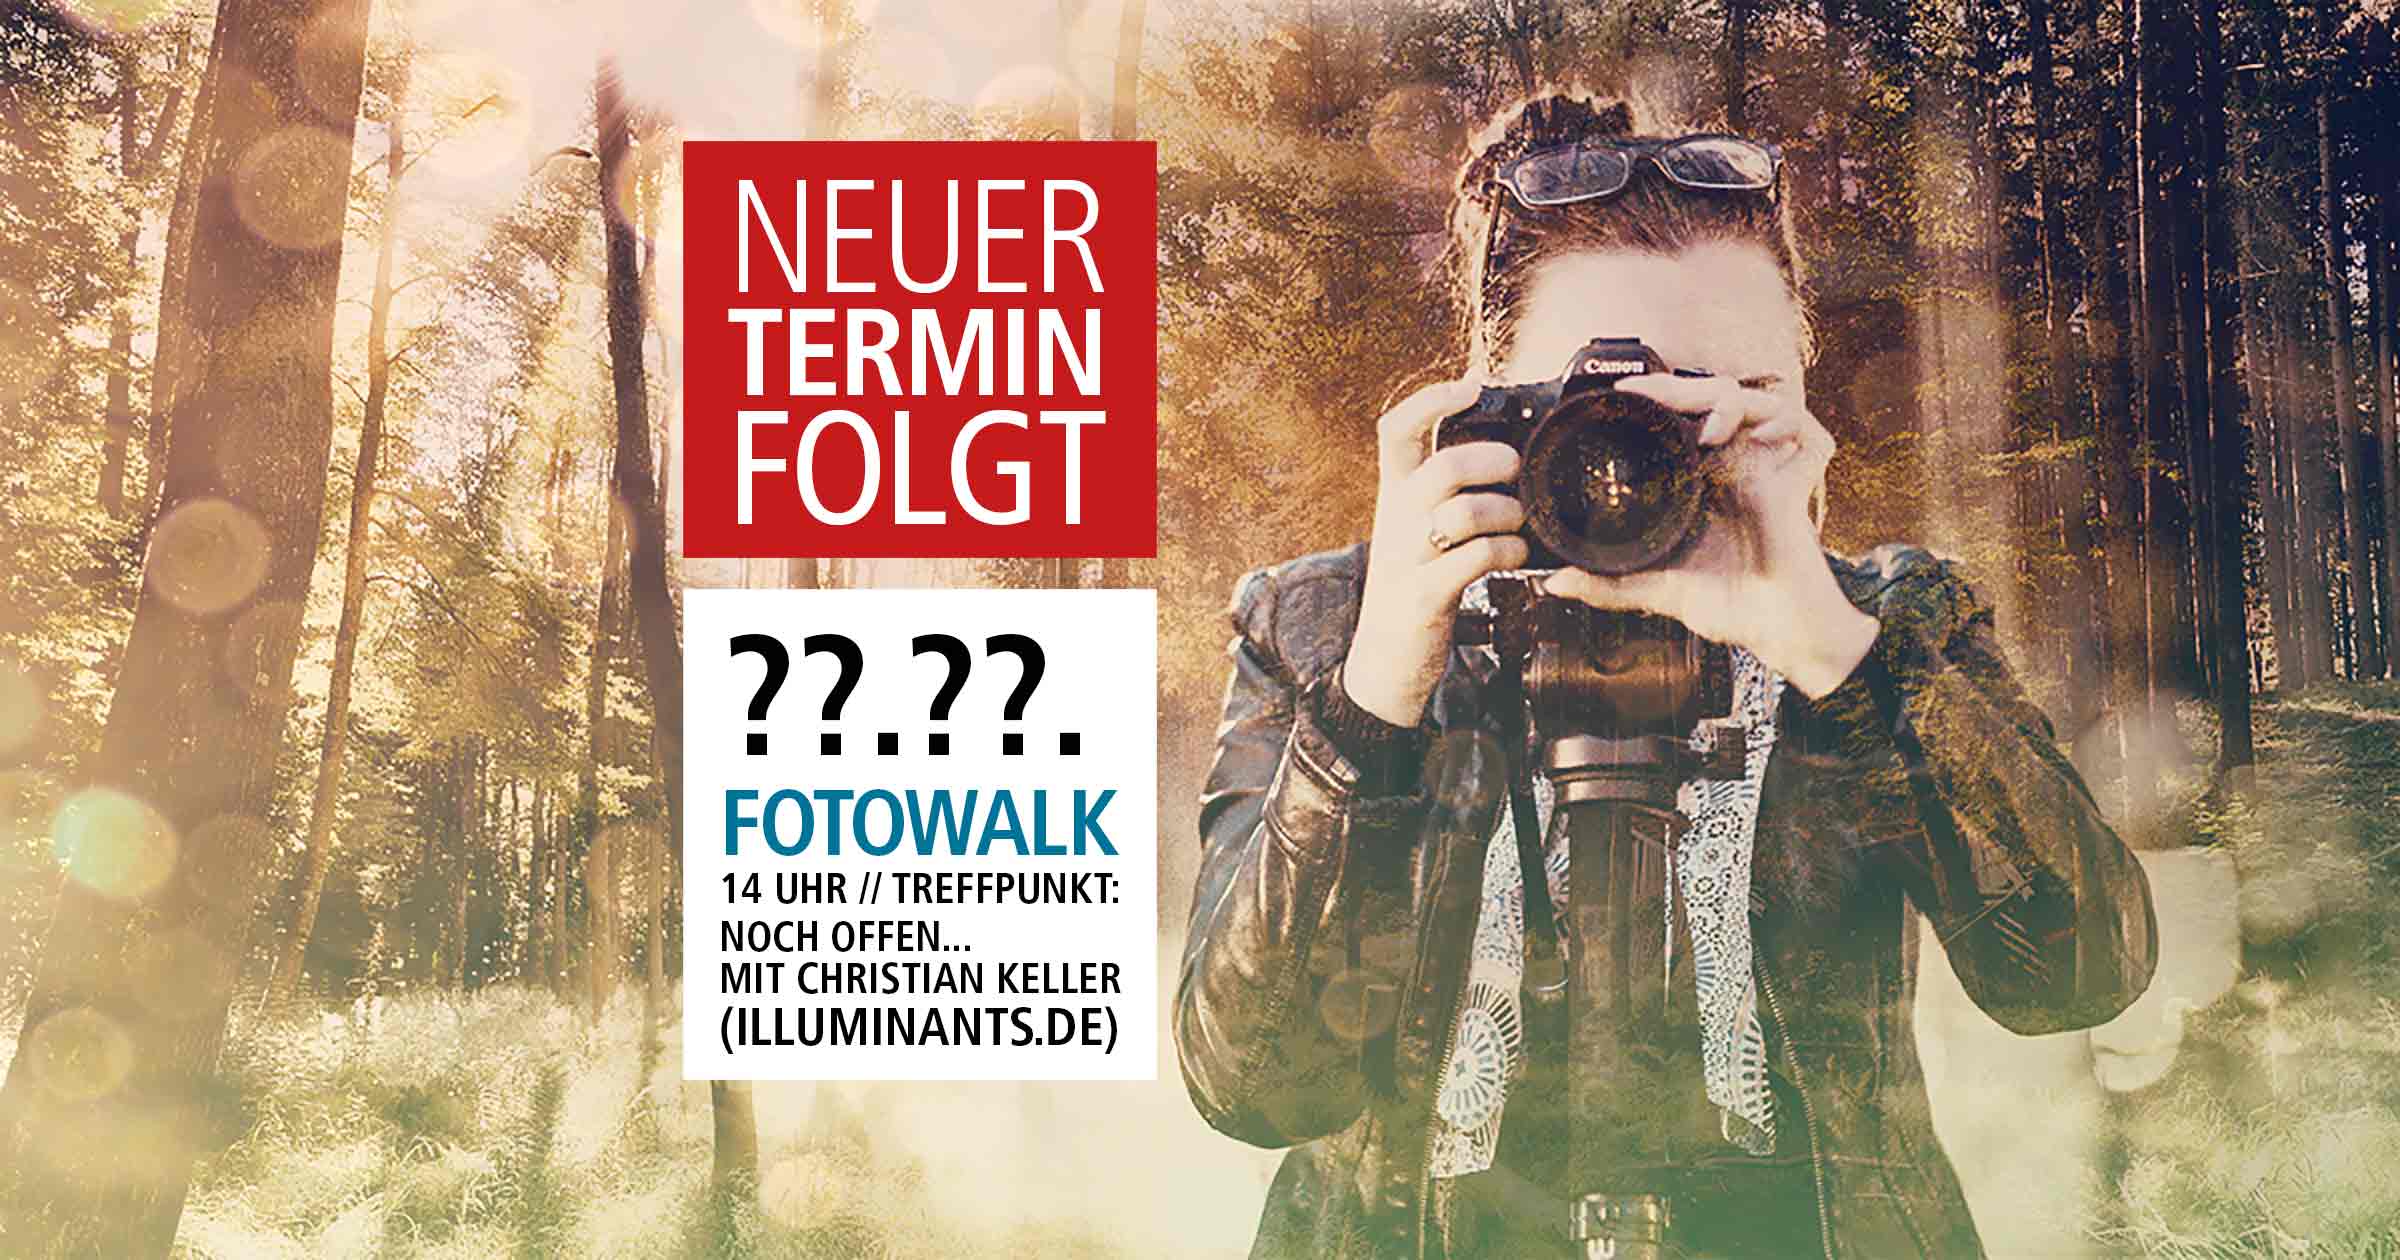 Fotowalk Lokal Forum in Krumbach mit Christian Keller neuer Termin folgt